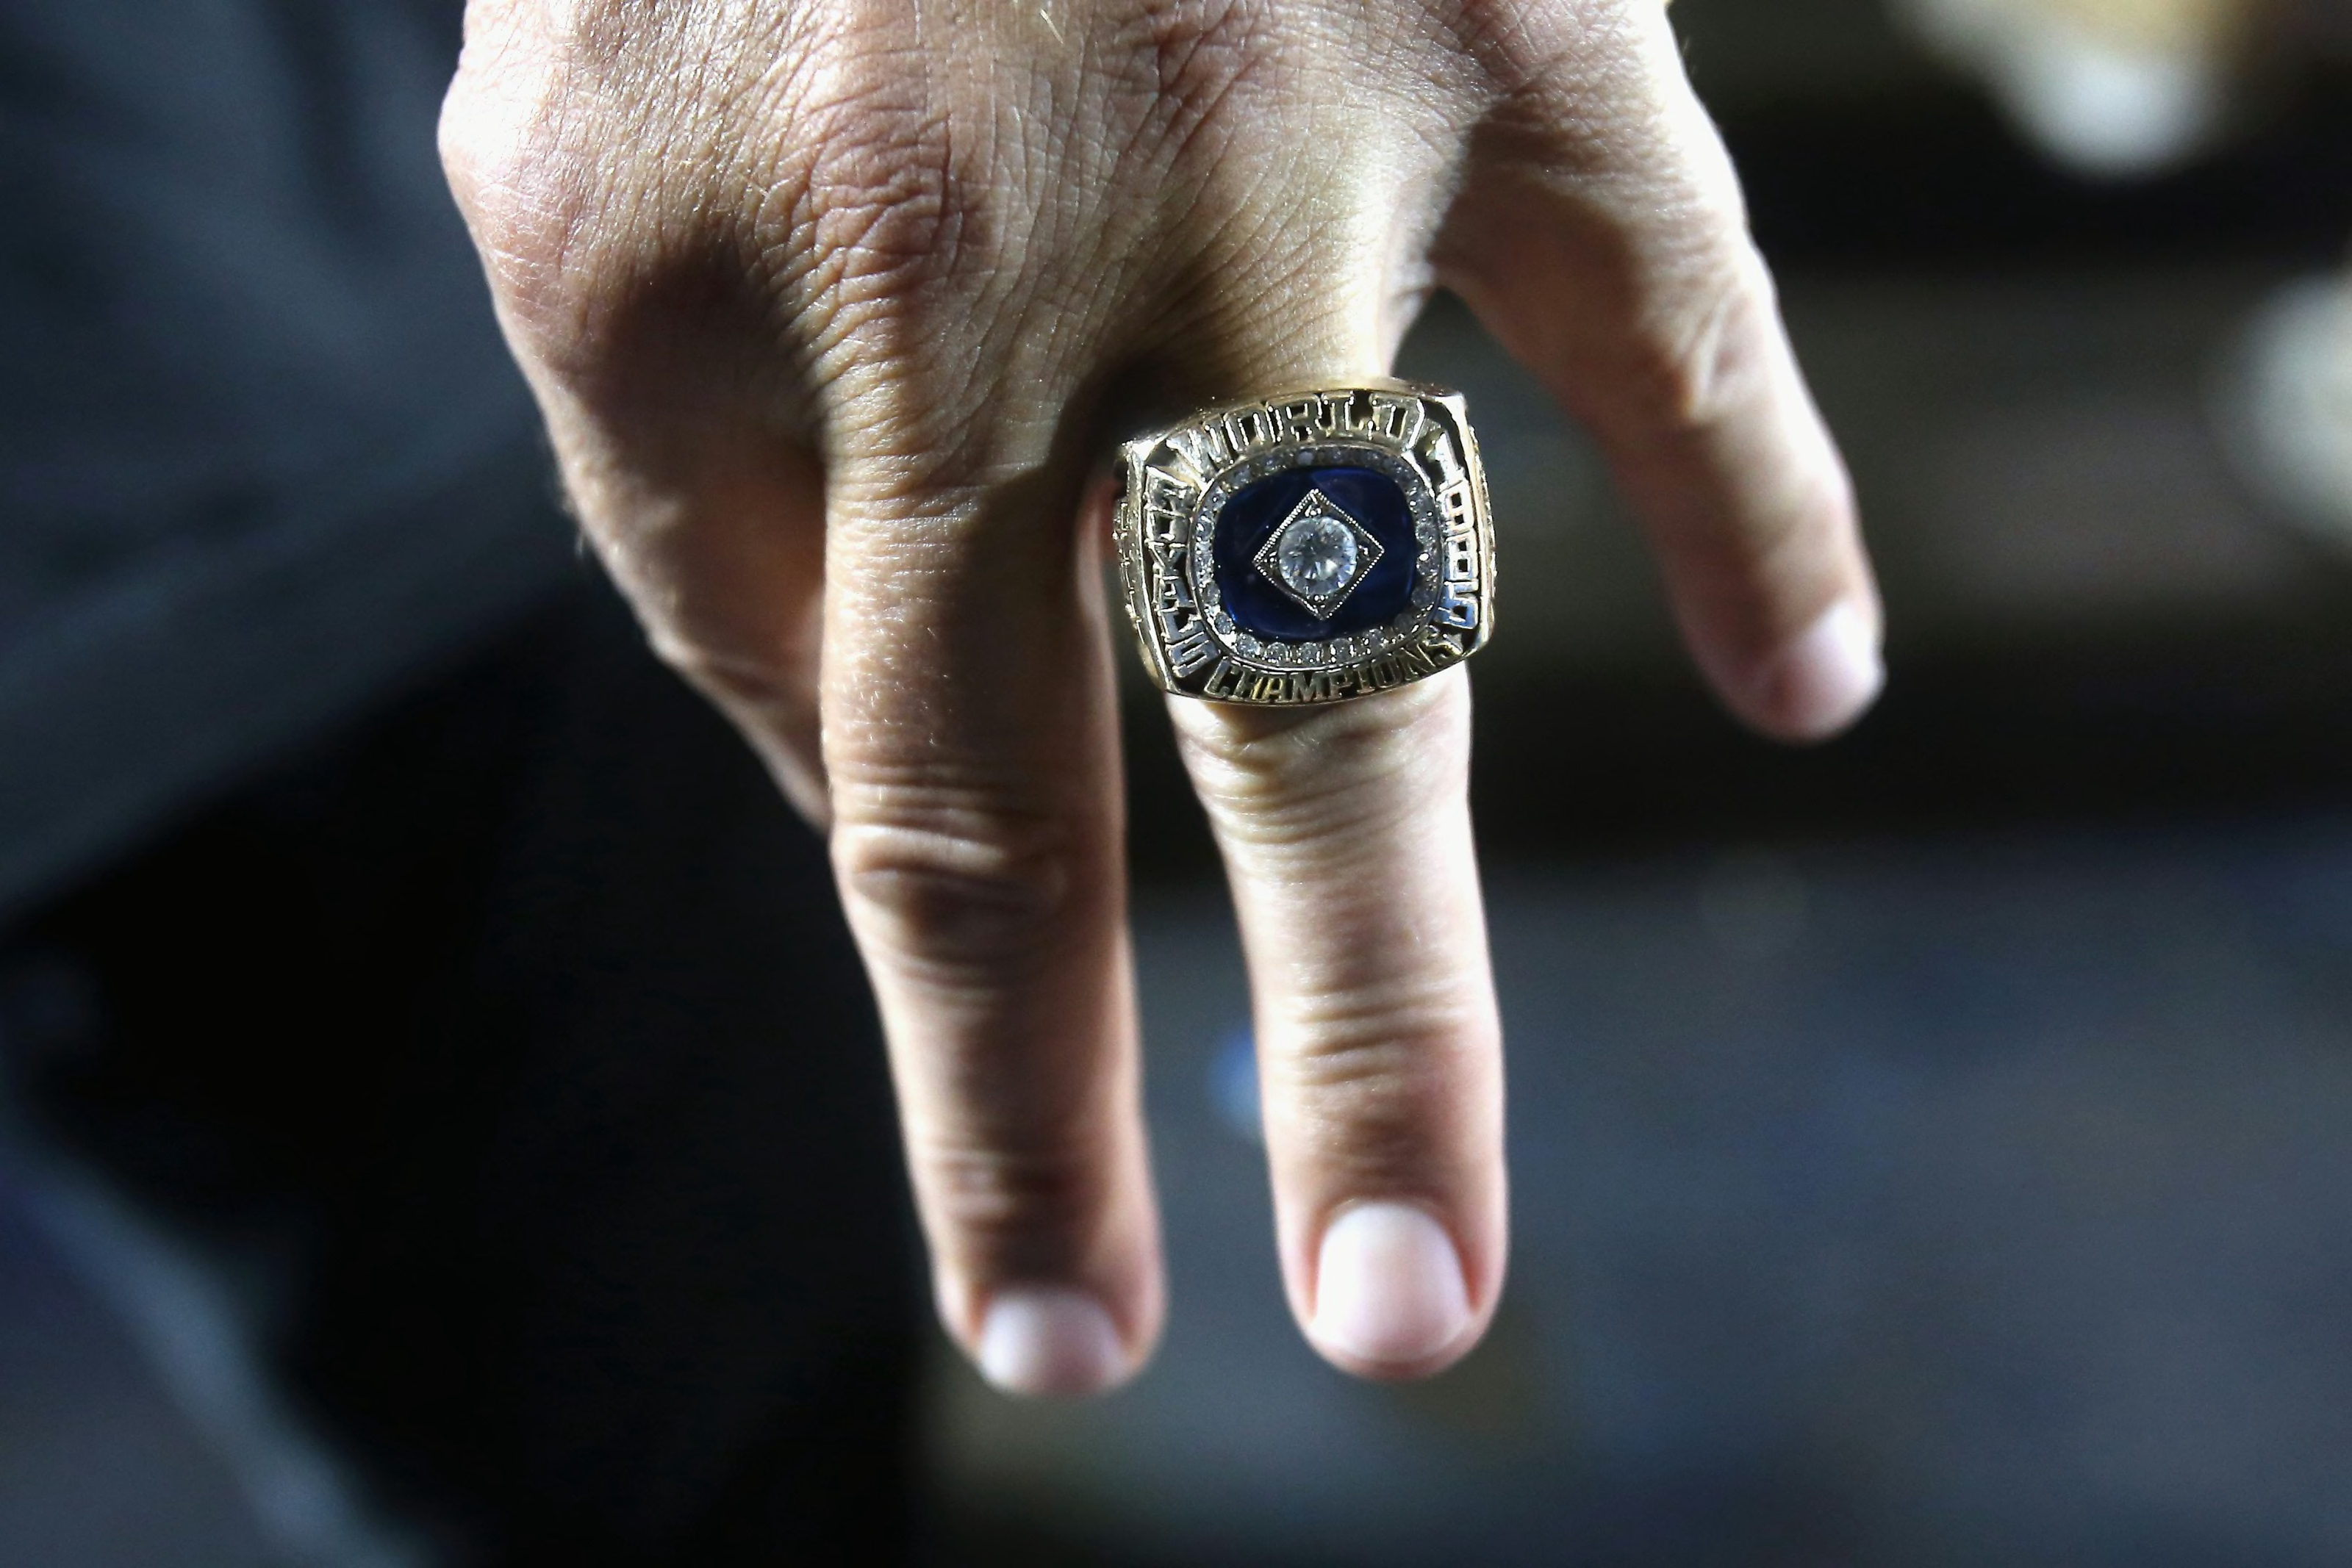 1985 World Series ring worn by Kansas City Royals former player George Brett